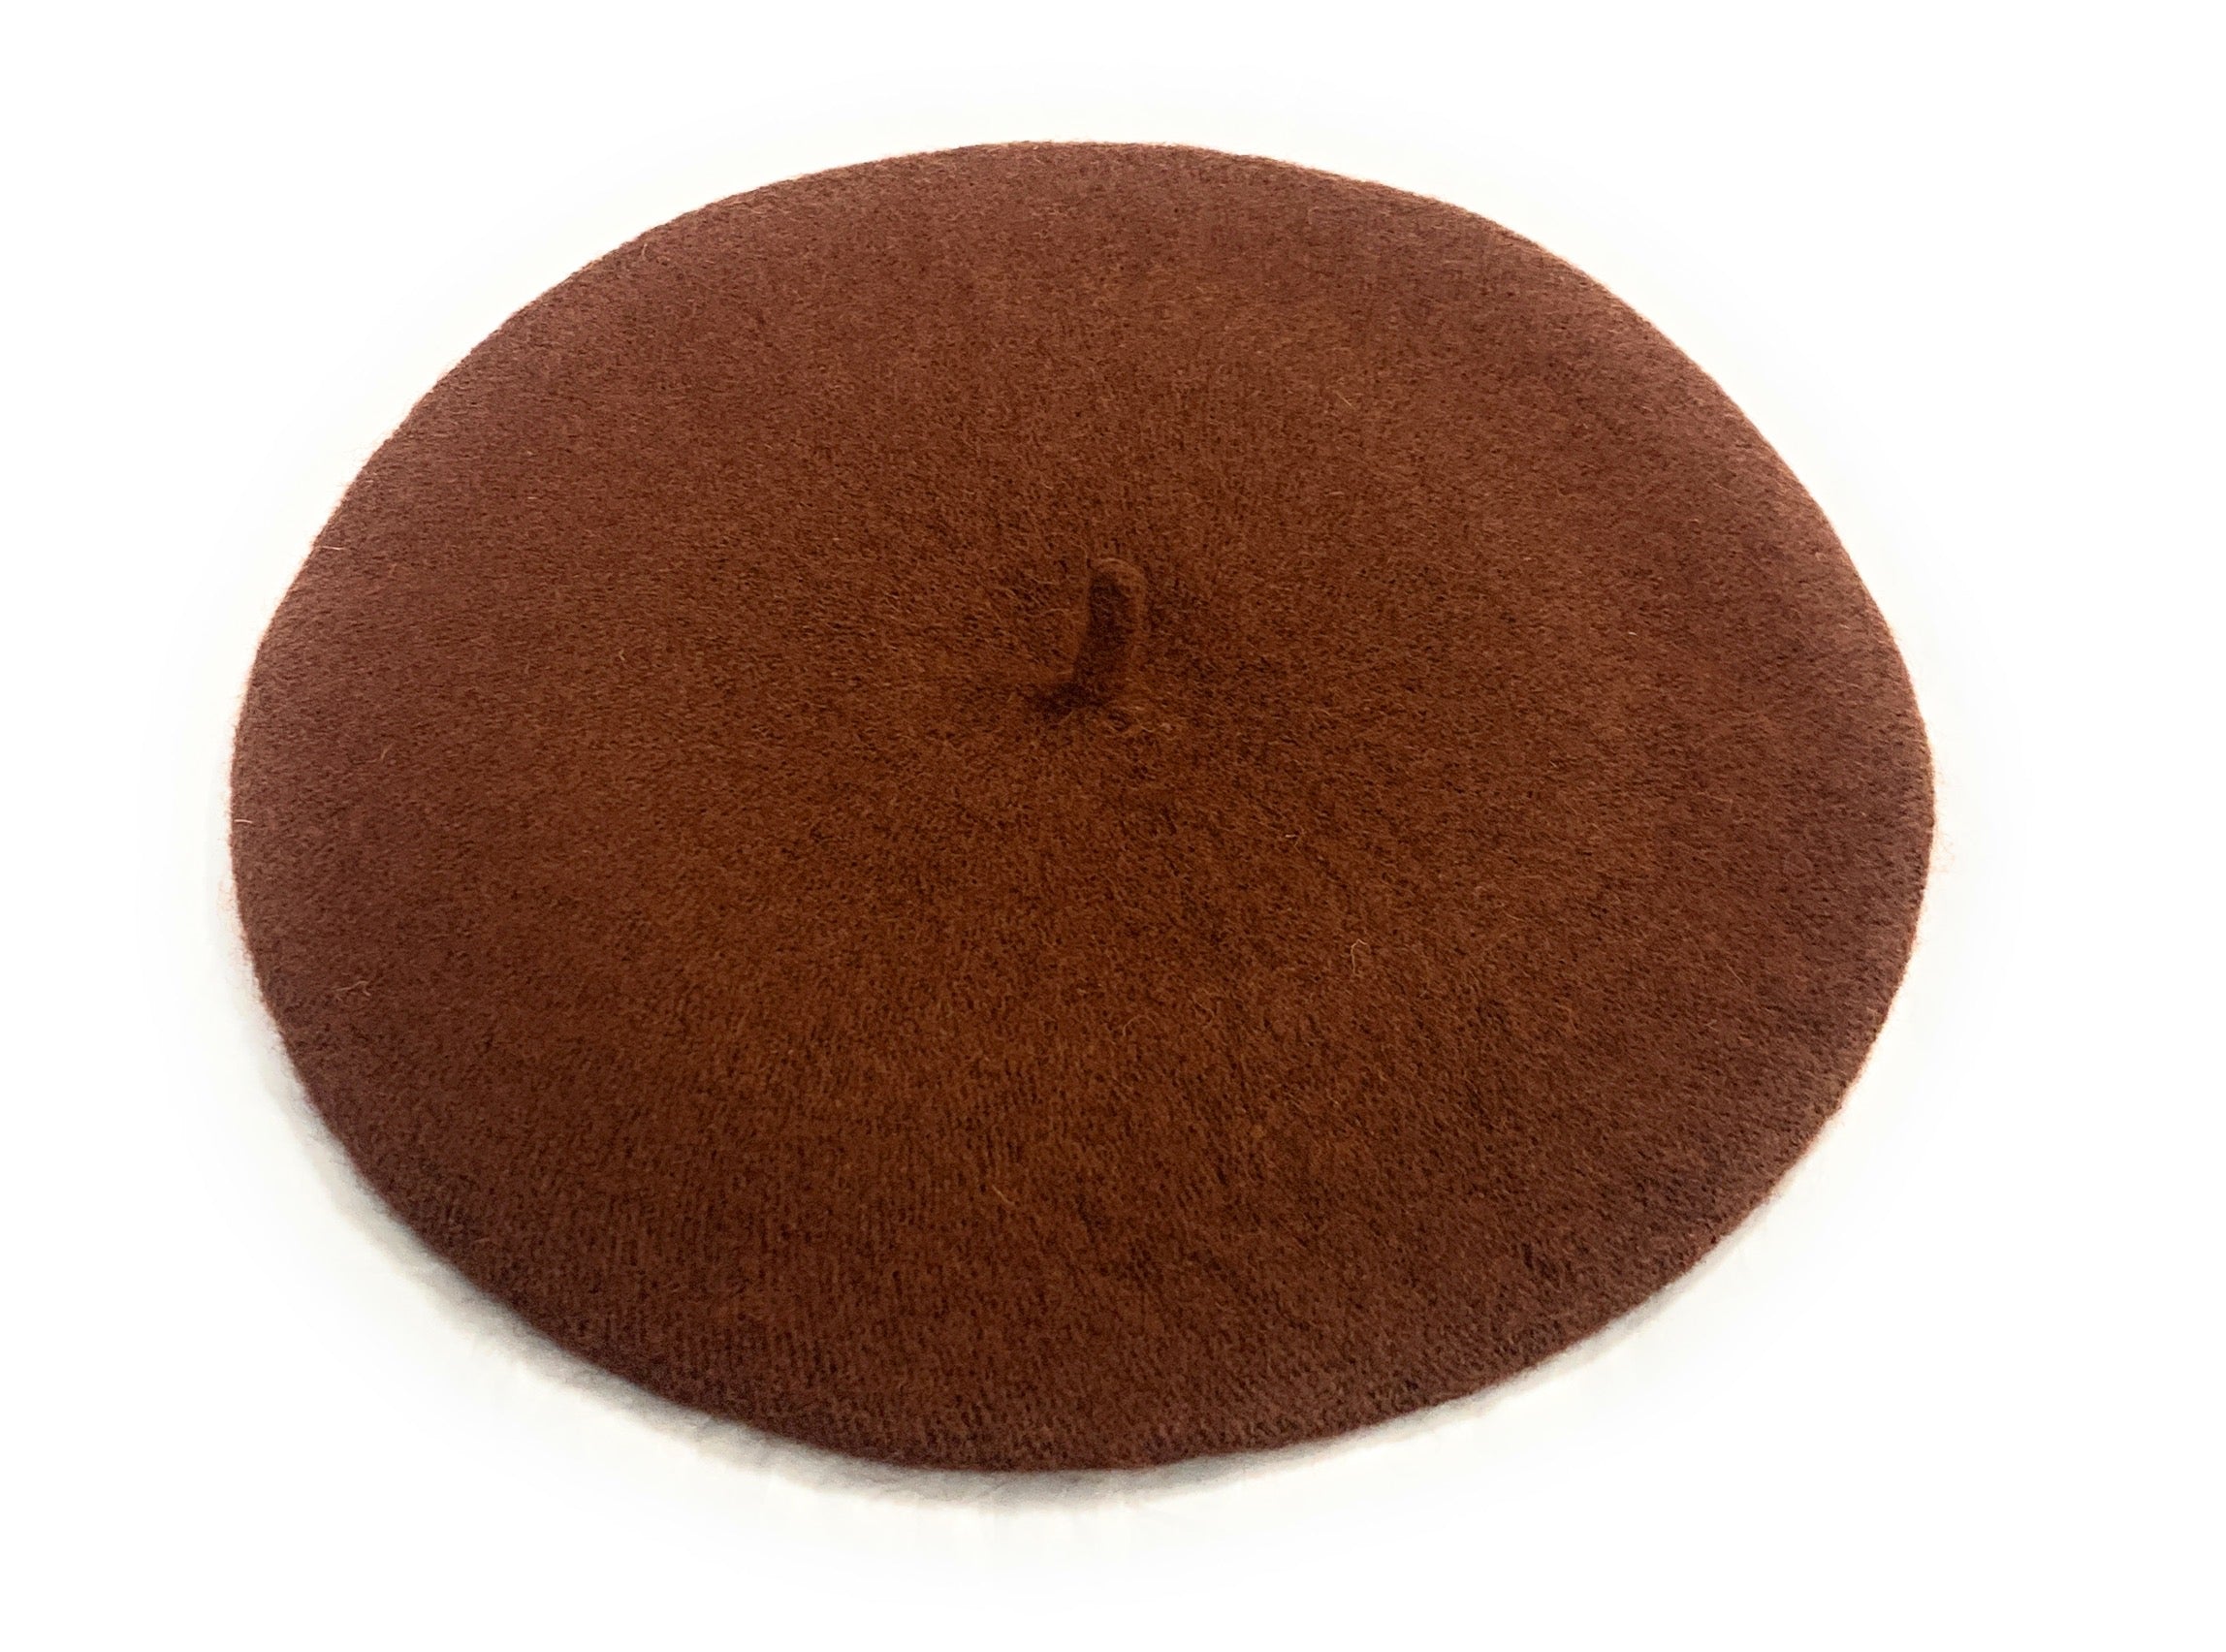 Ladies' French Style Winter Woollen Beret Beanie Hat Cap - Coffee Brown